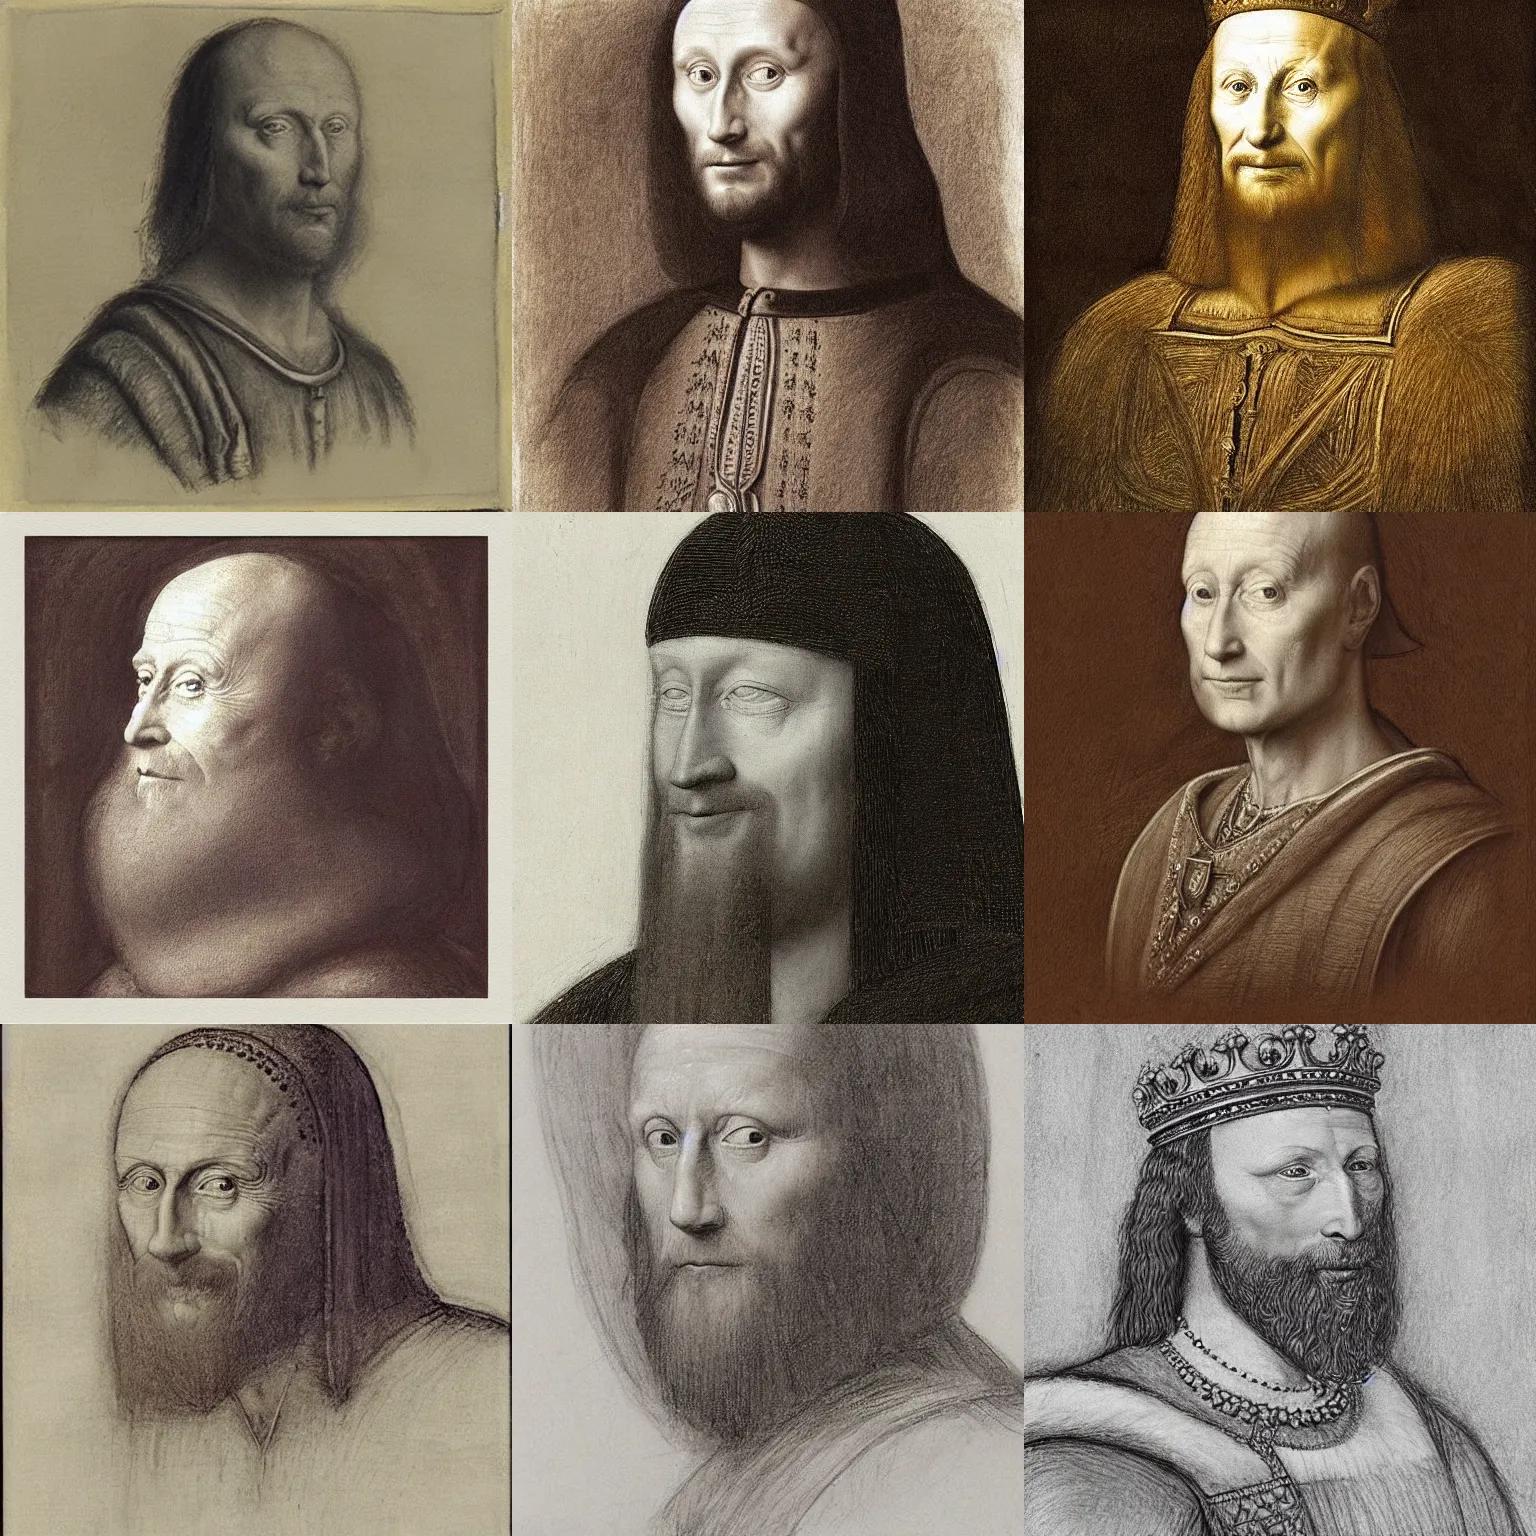 Prompt: “Portrait of king harald v by Leonardo da Vinci, pencil on paper”